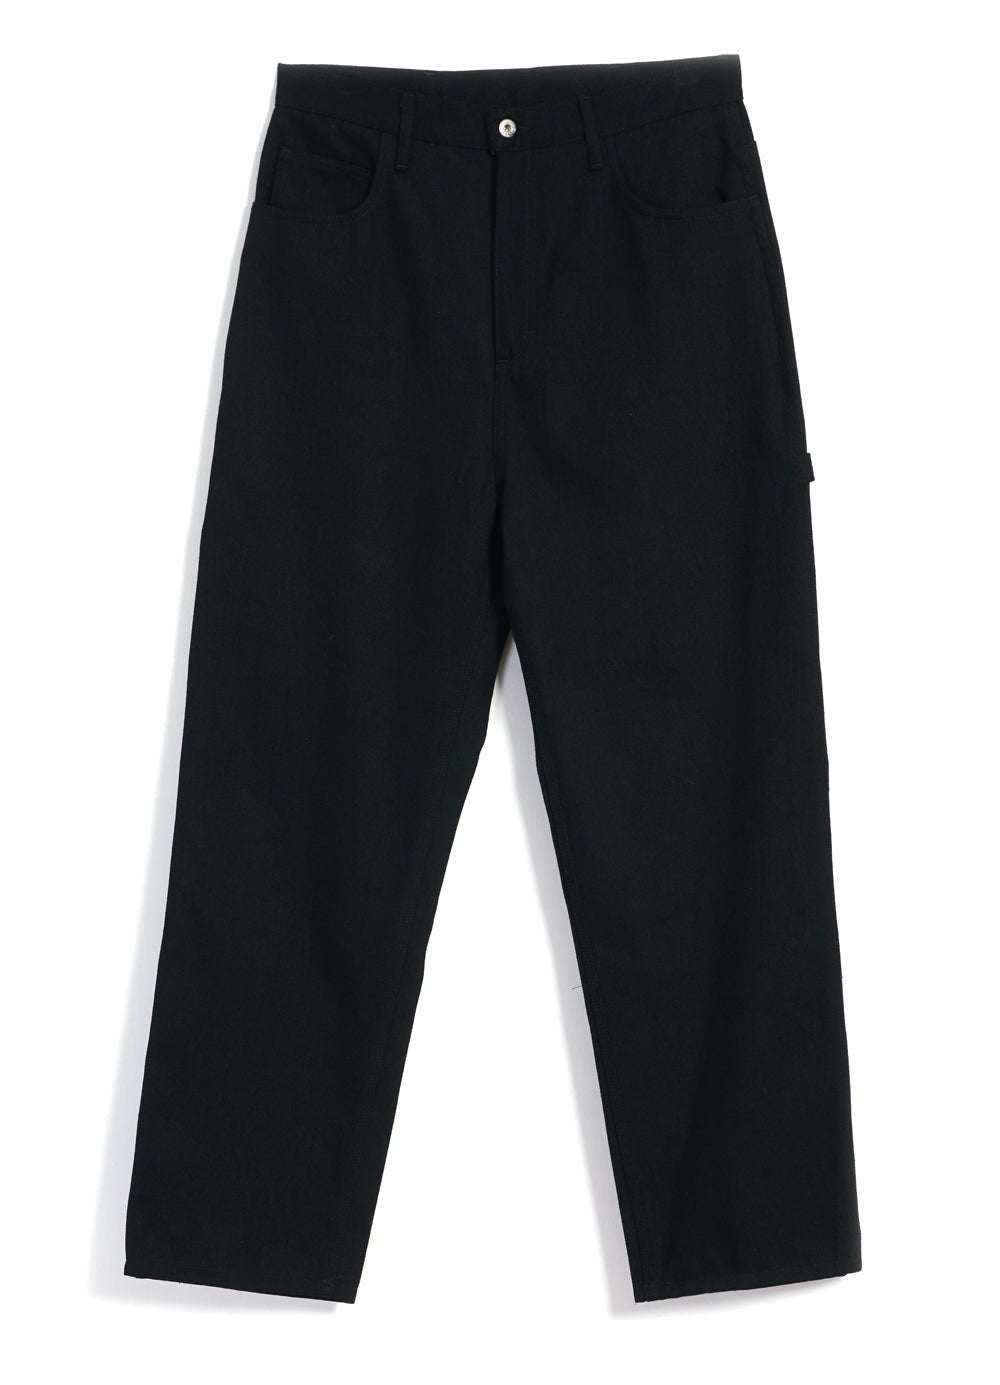 MONITALY - PAINTER PANTS | 14oz Drop Crotch Denim Jeans | Black - HANSEN Garments